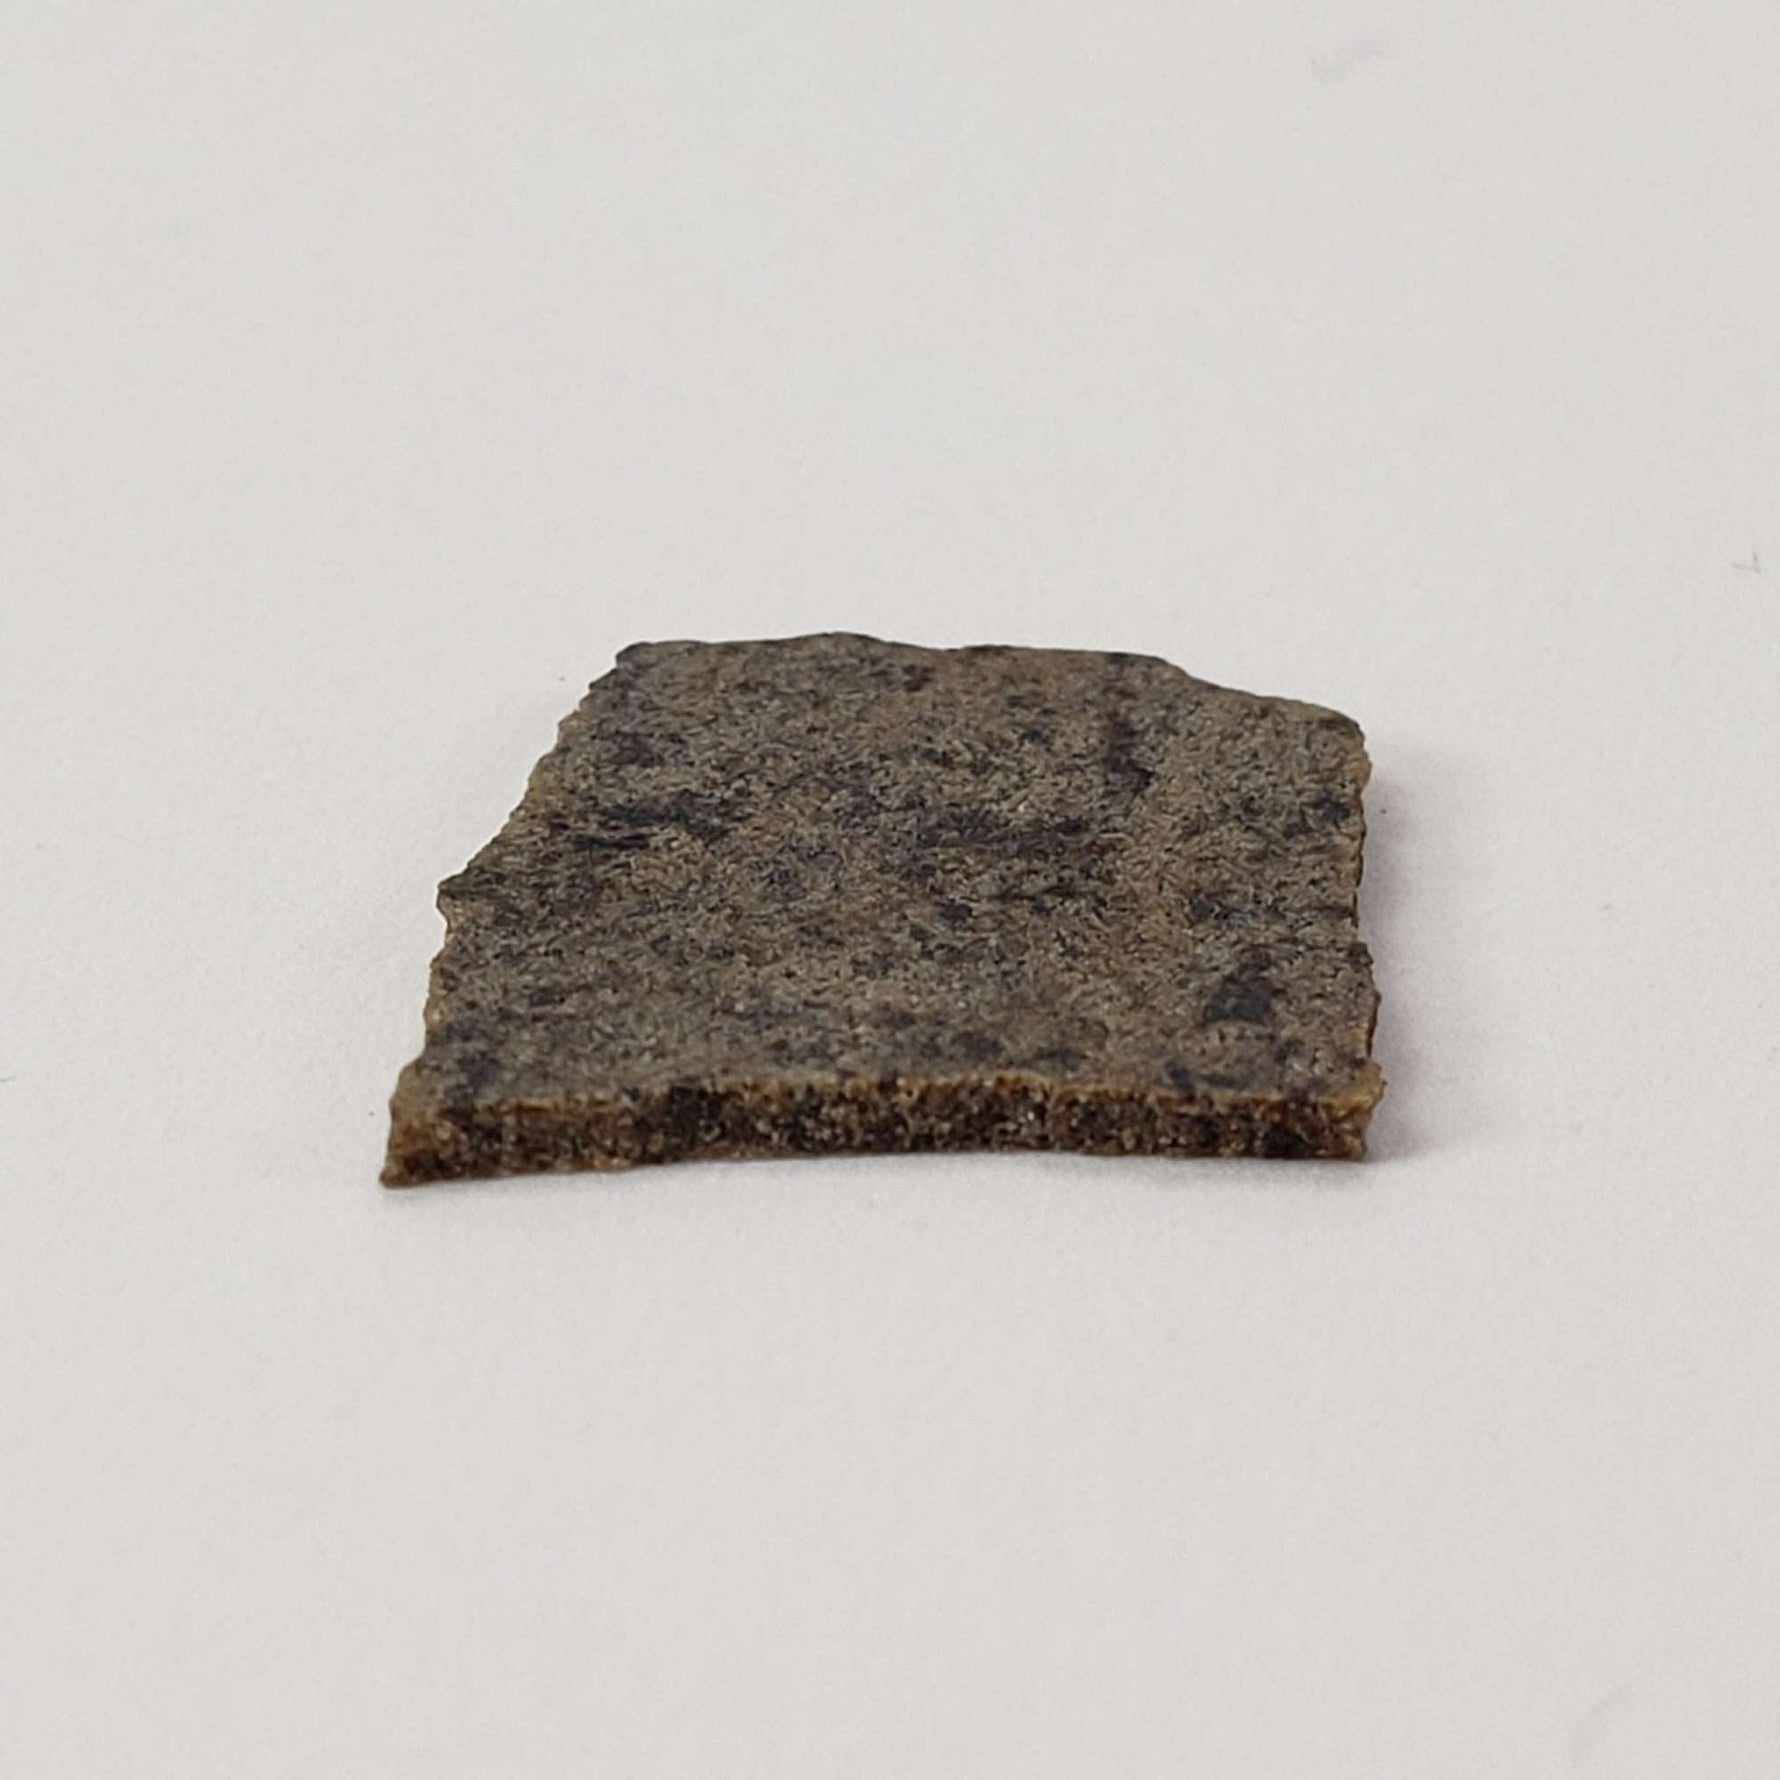 Dhofar 019 Meteorite | .382 Gr | Slice | Martian Basaltic Shergottite | Mars | Rare | Canagem.com